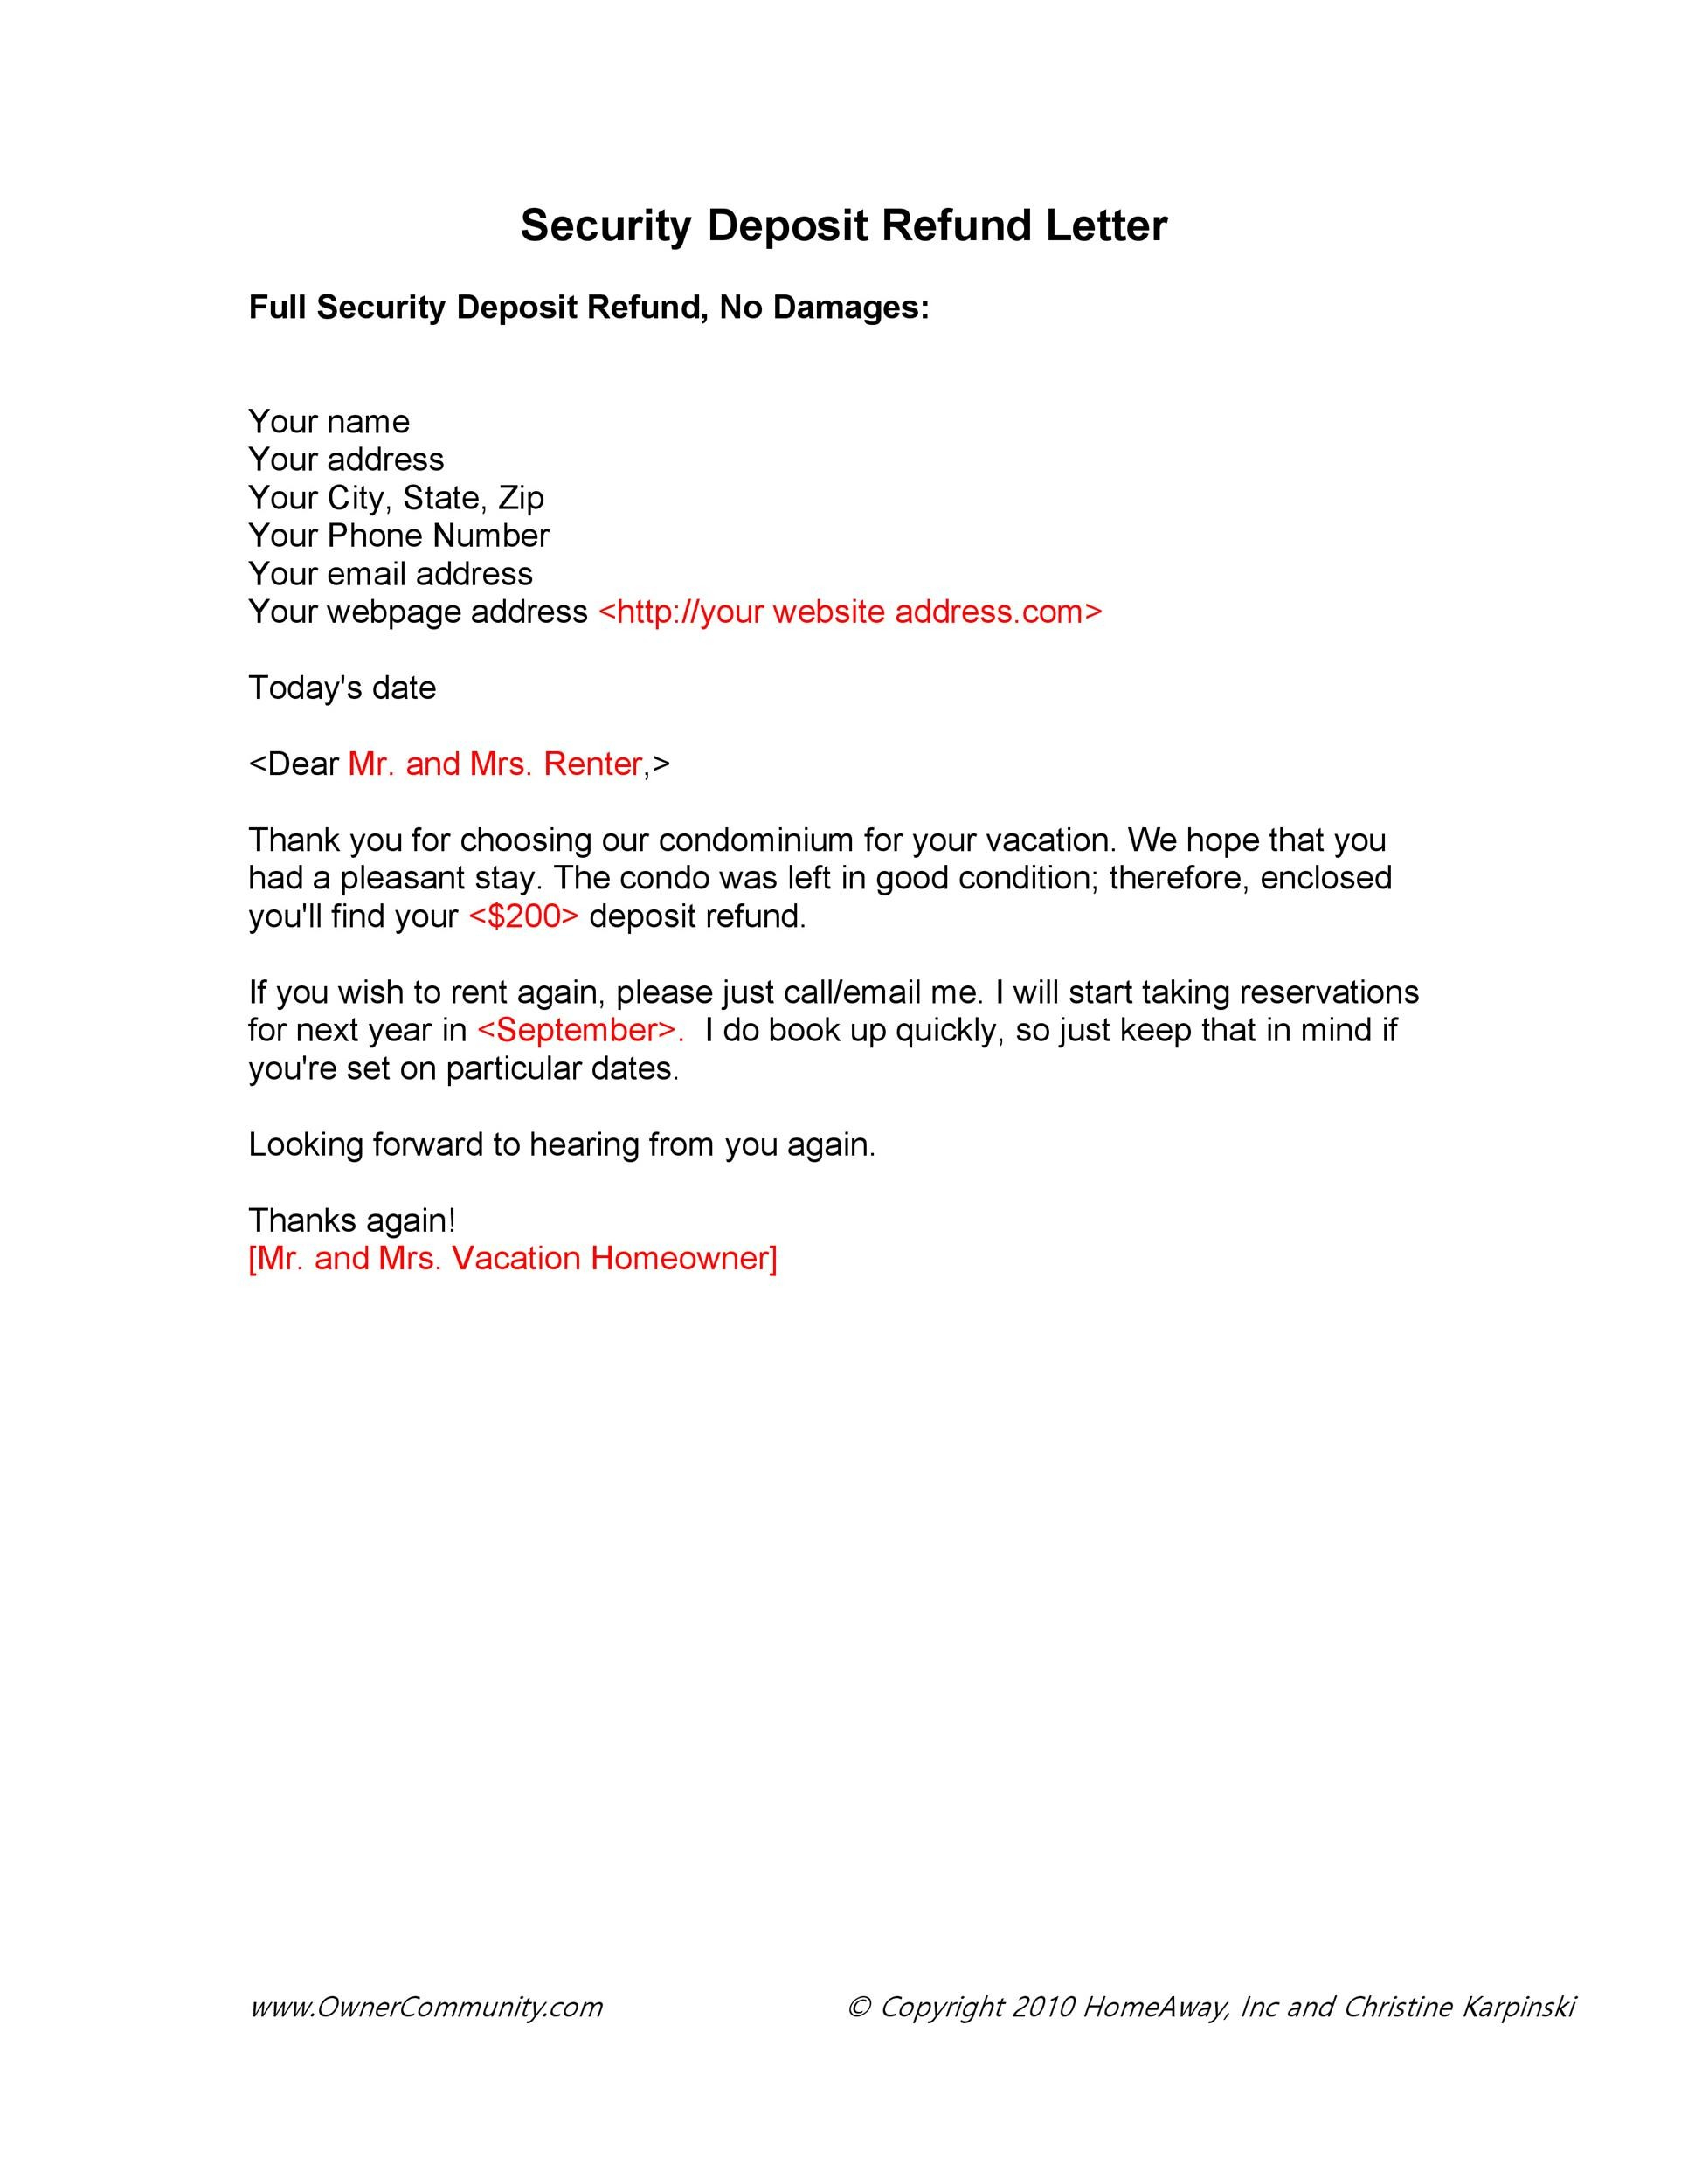 Sample letter of refund deposit With Security Deposit Return Letter Template